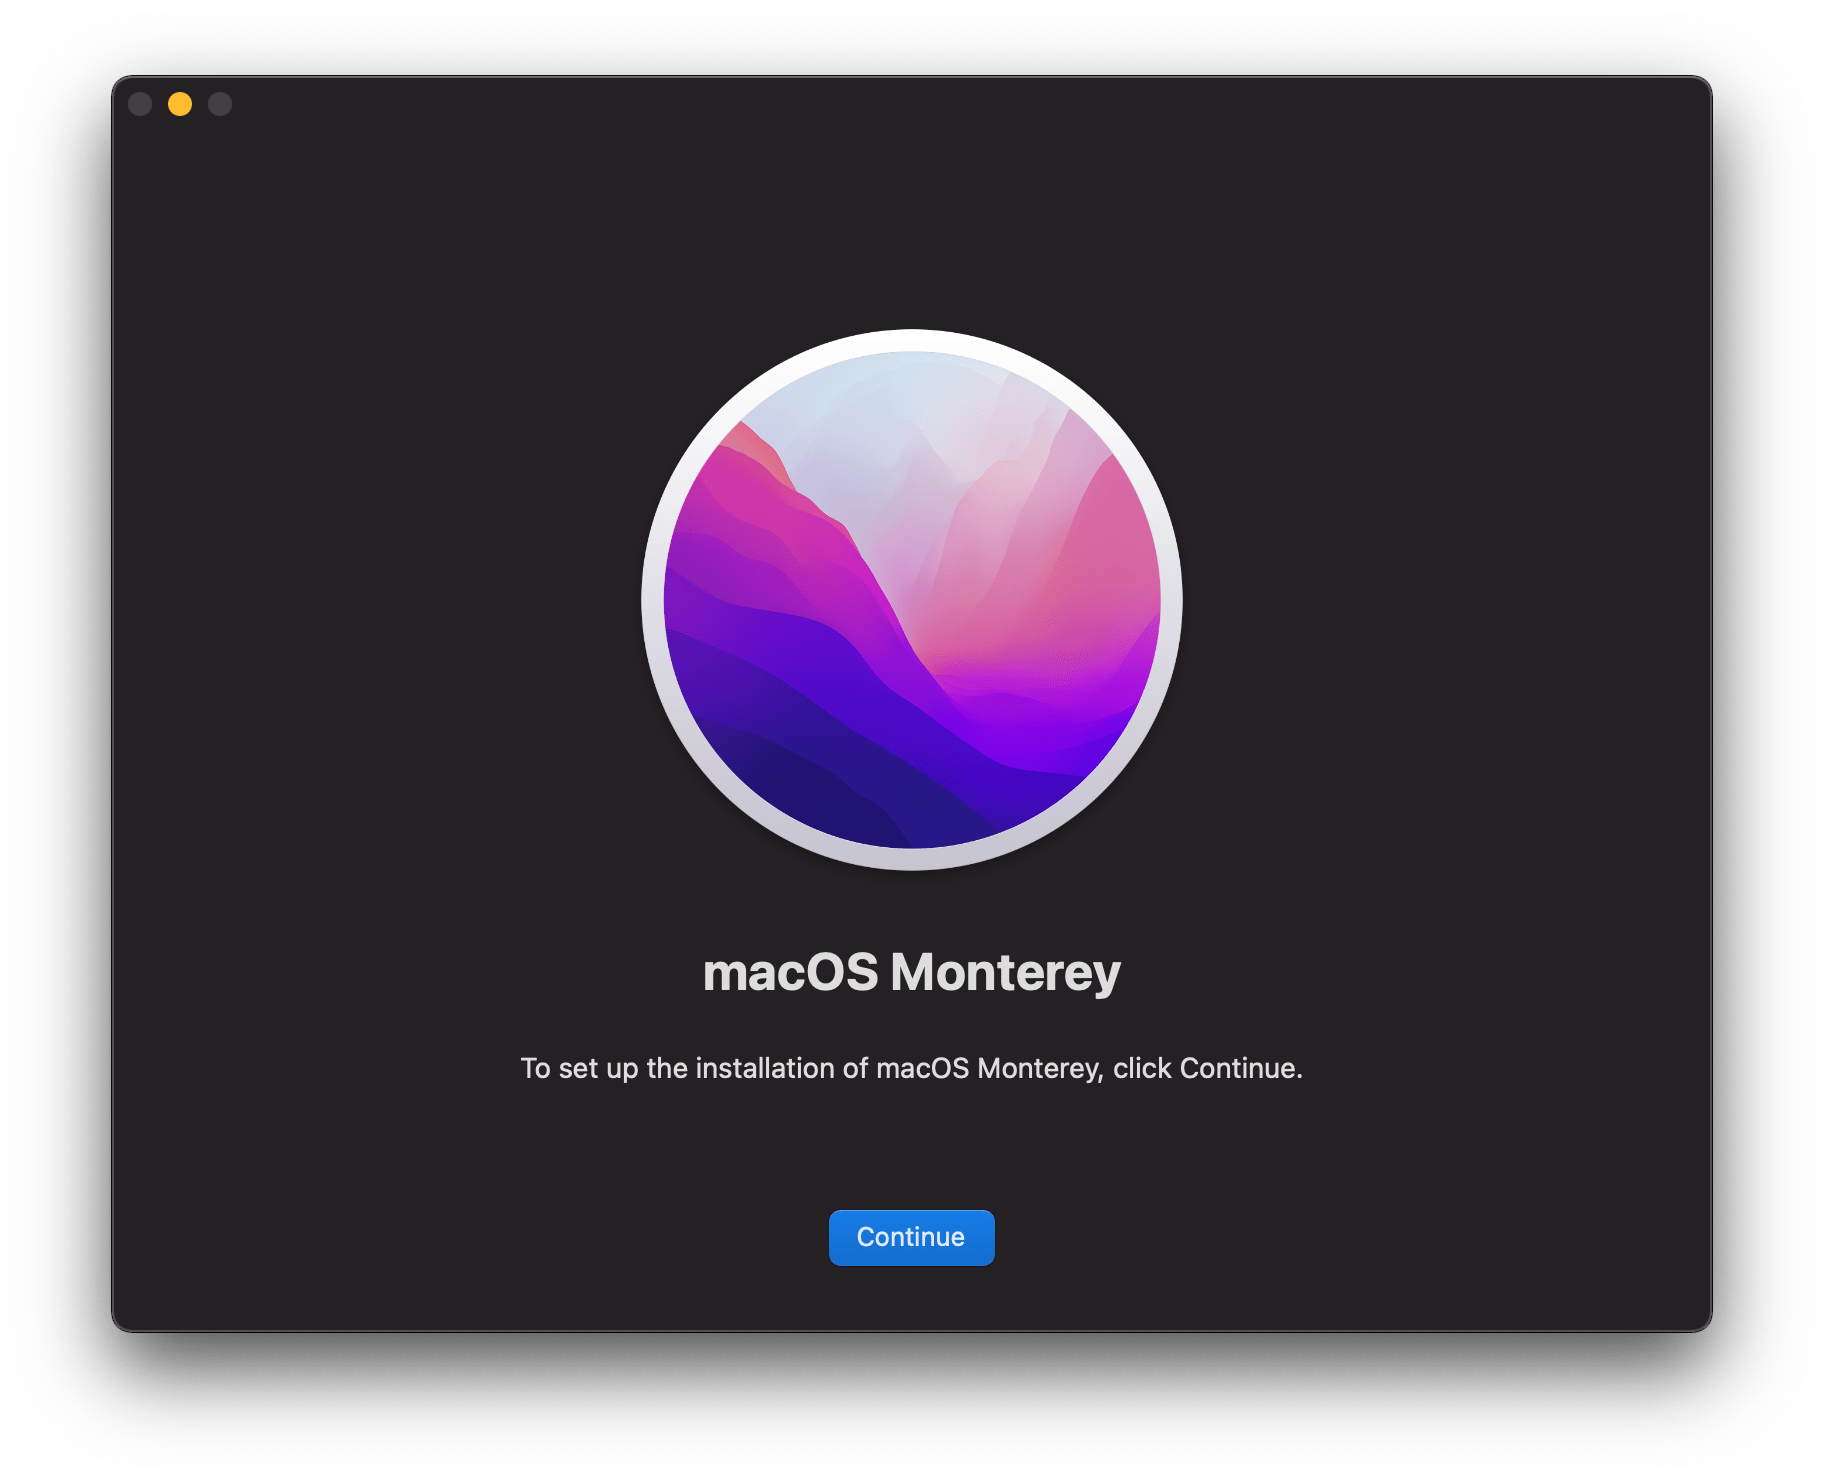 macOS Monterey Installation